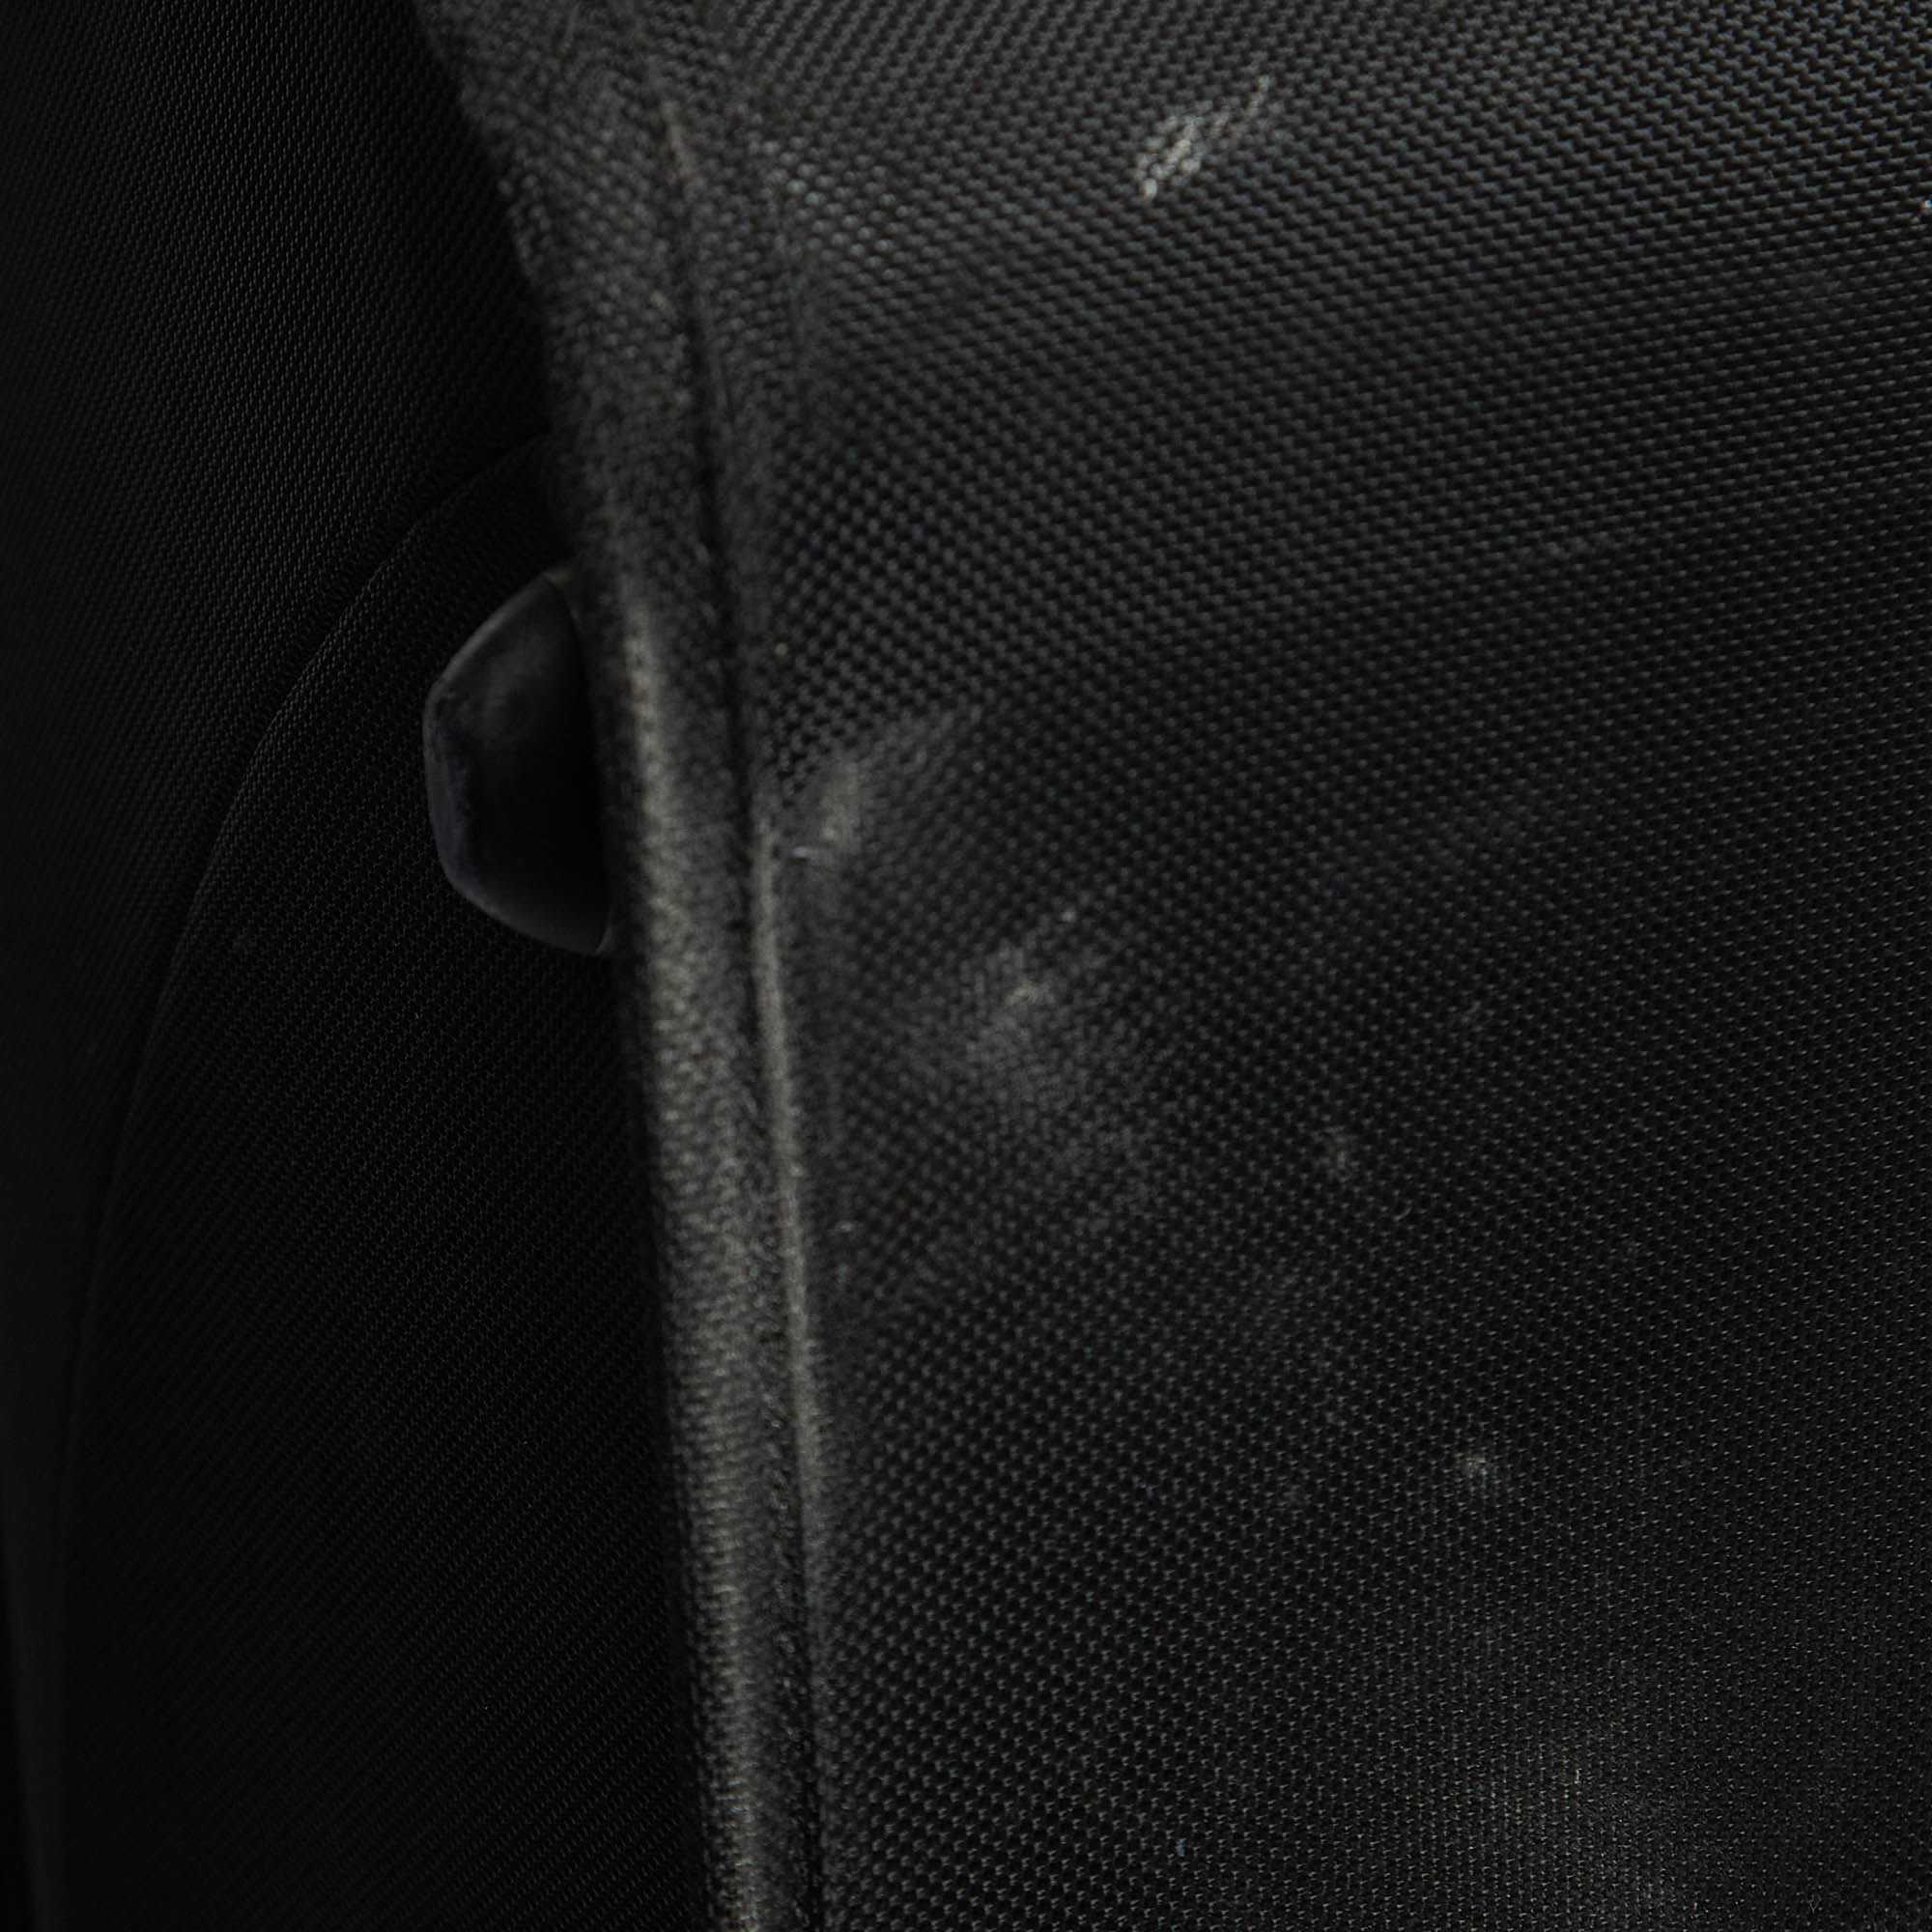 TUMI Black Nylon 2 Wheeled Alpha G4 Extended Trip Expandable Luggage